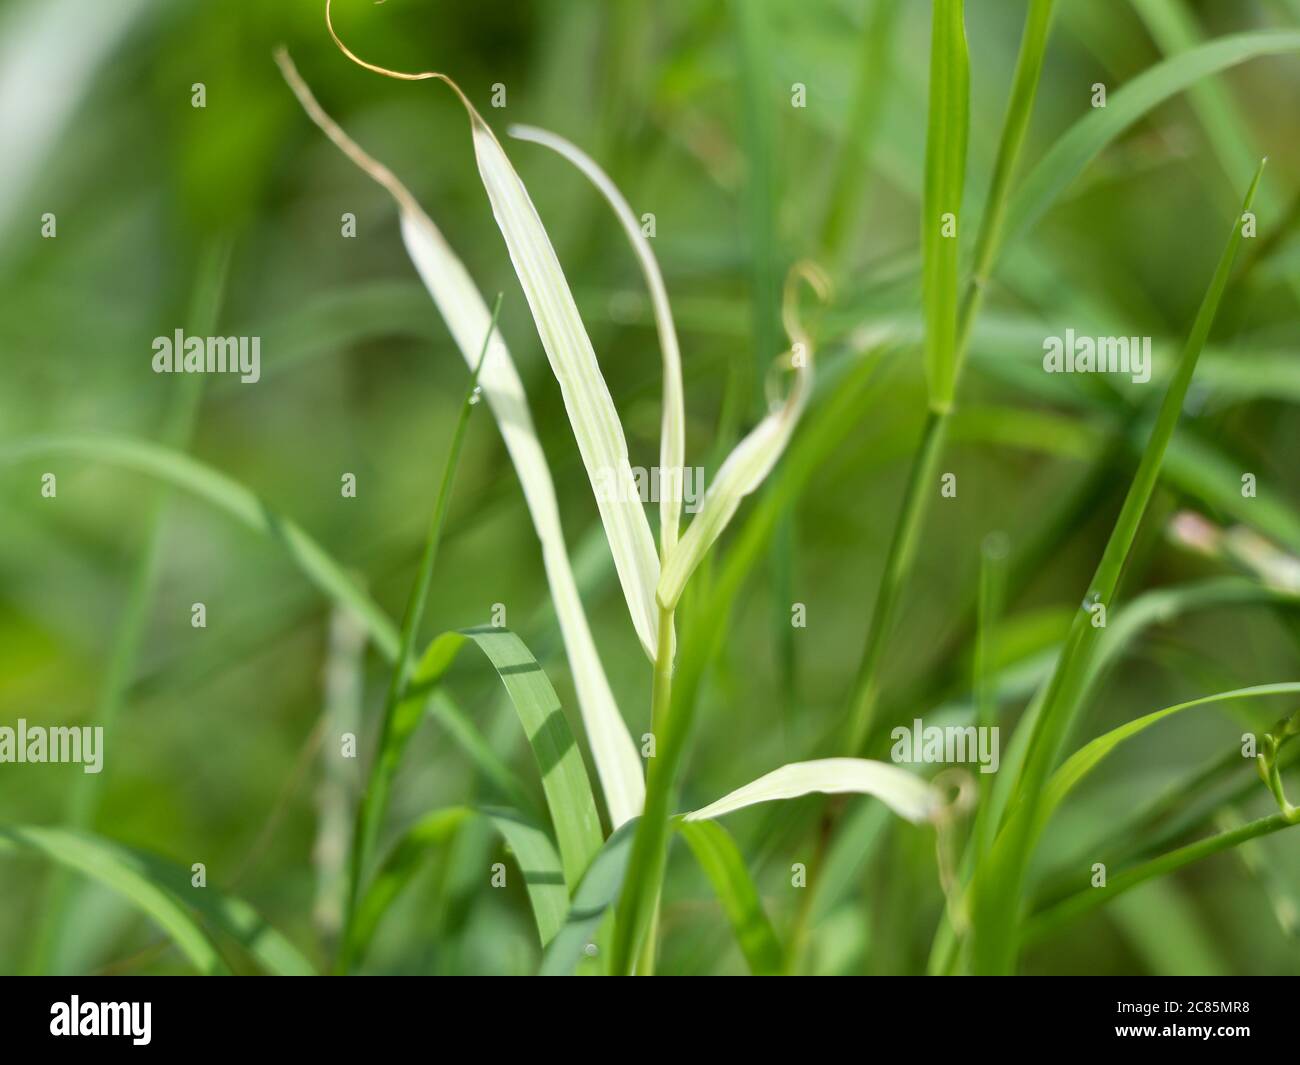 Cynodon dactylon or Bermuda grass in white and green color, Perennial Grass Stock Photo